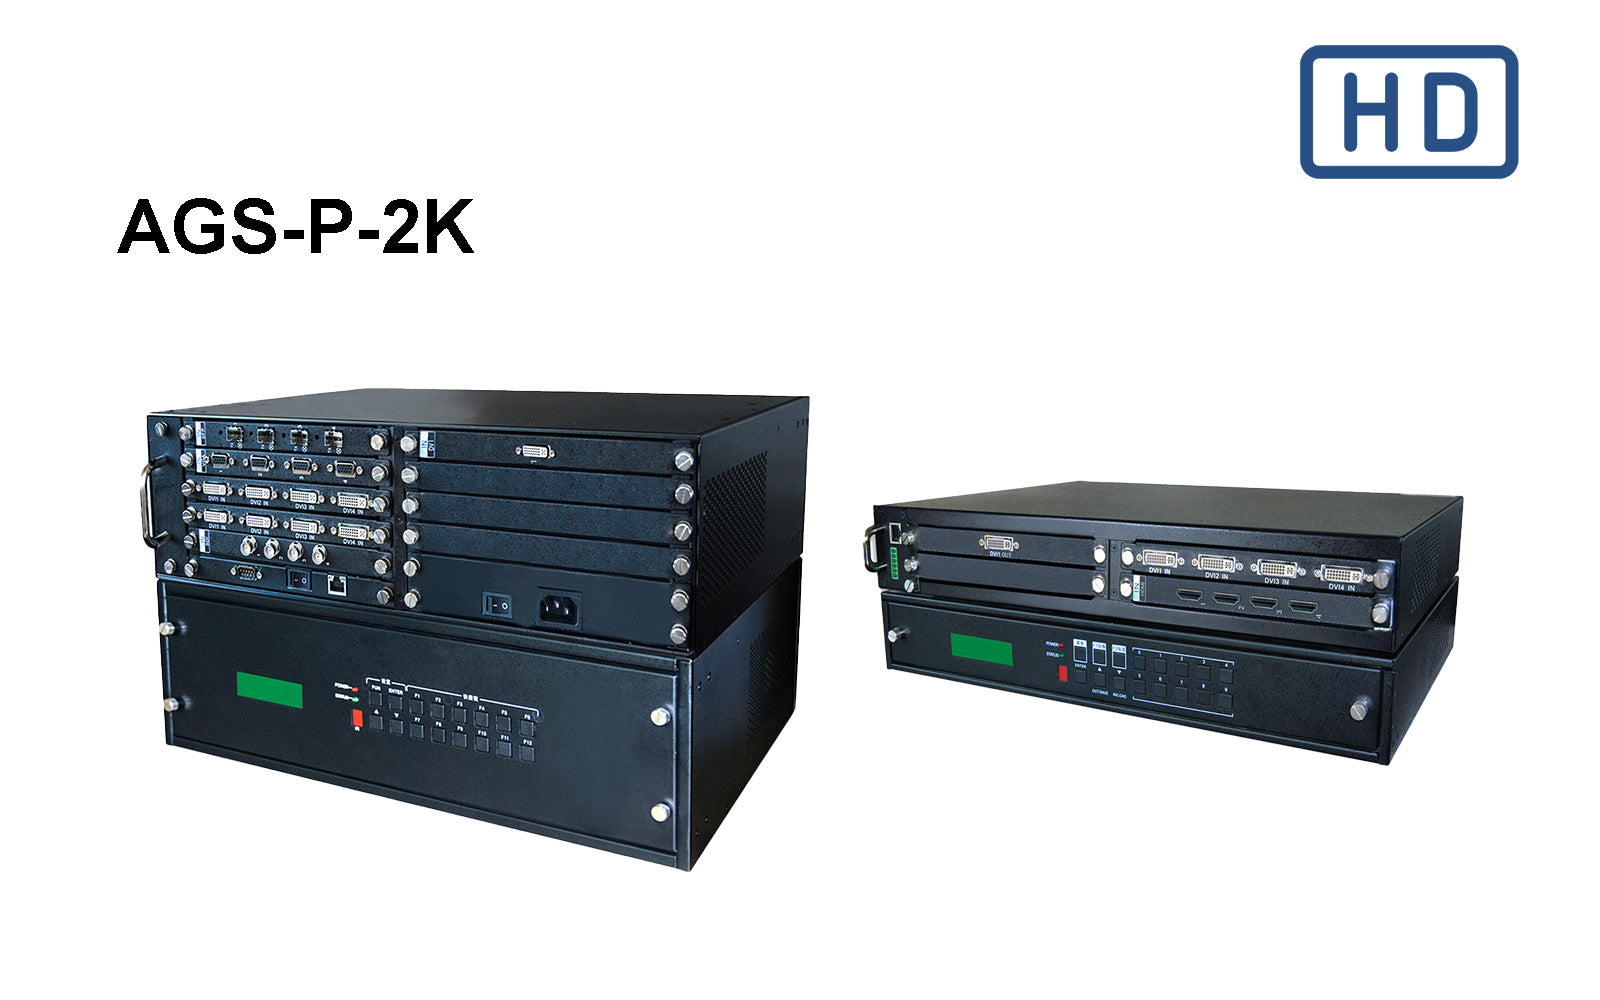  AGS-P-2K Video Processor